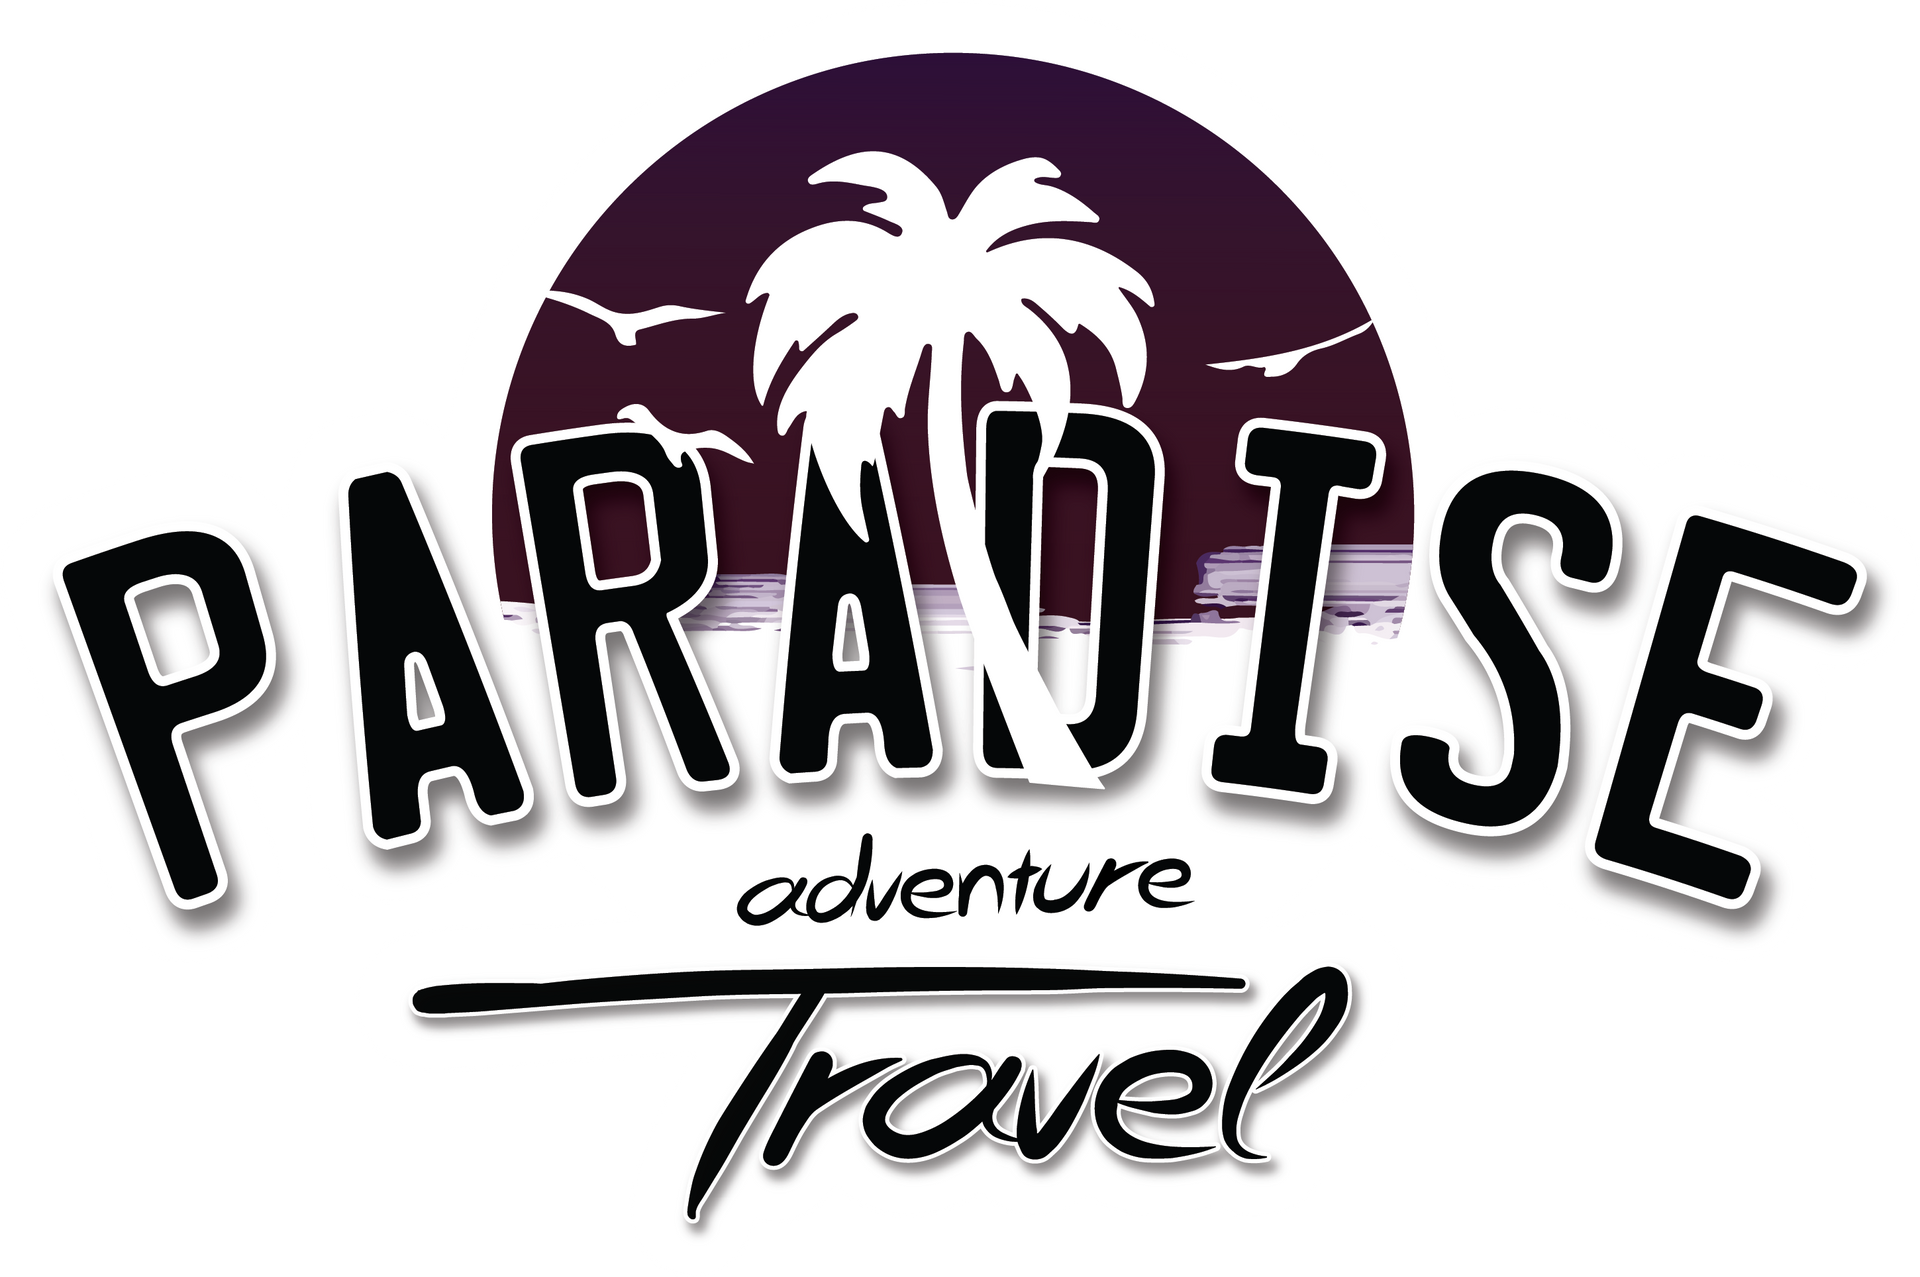 Paradise Adventure Travel
Cairns & East Coast Travel Specialists